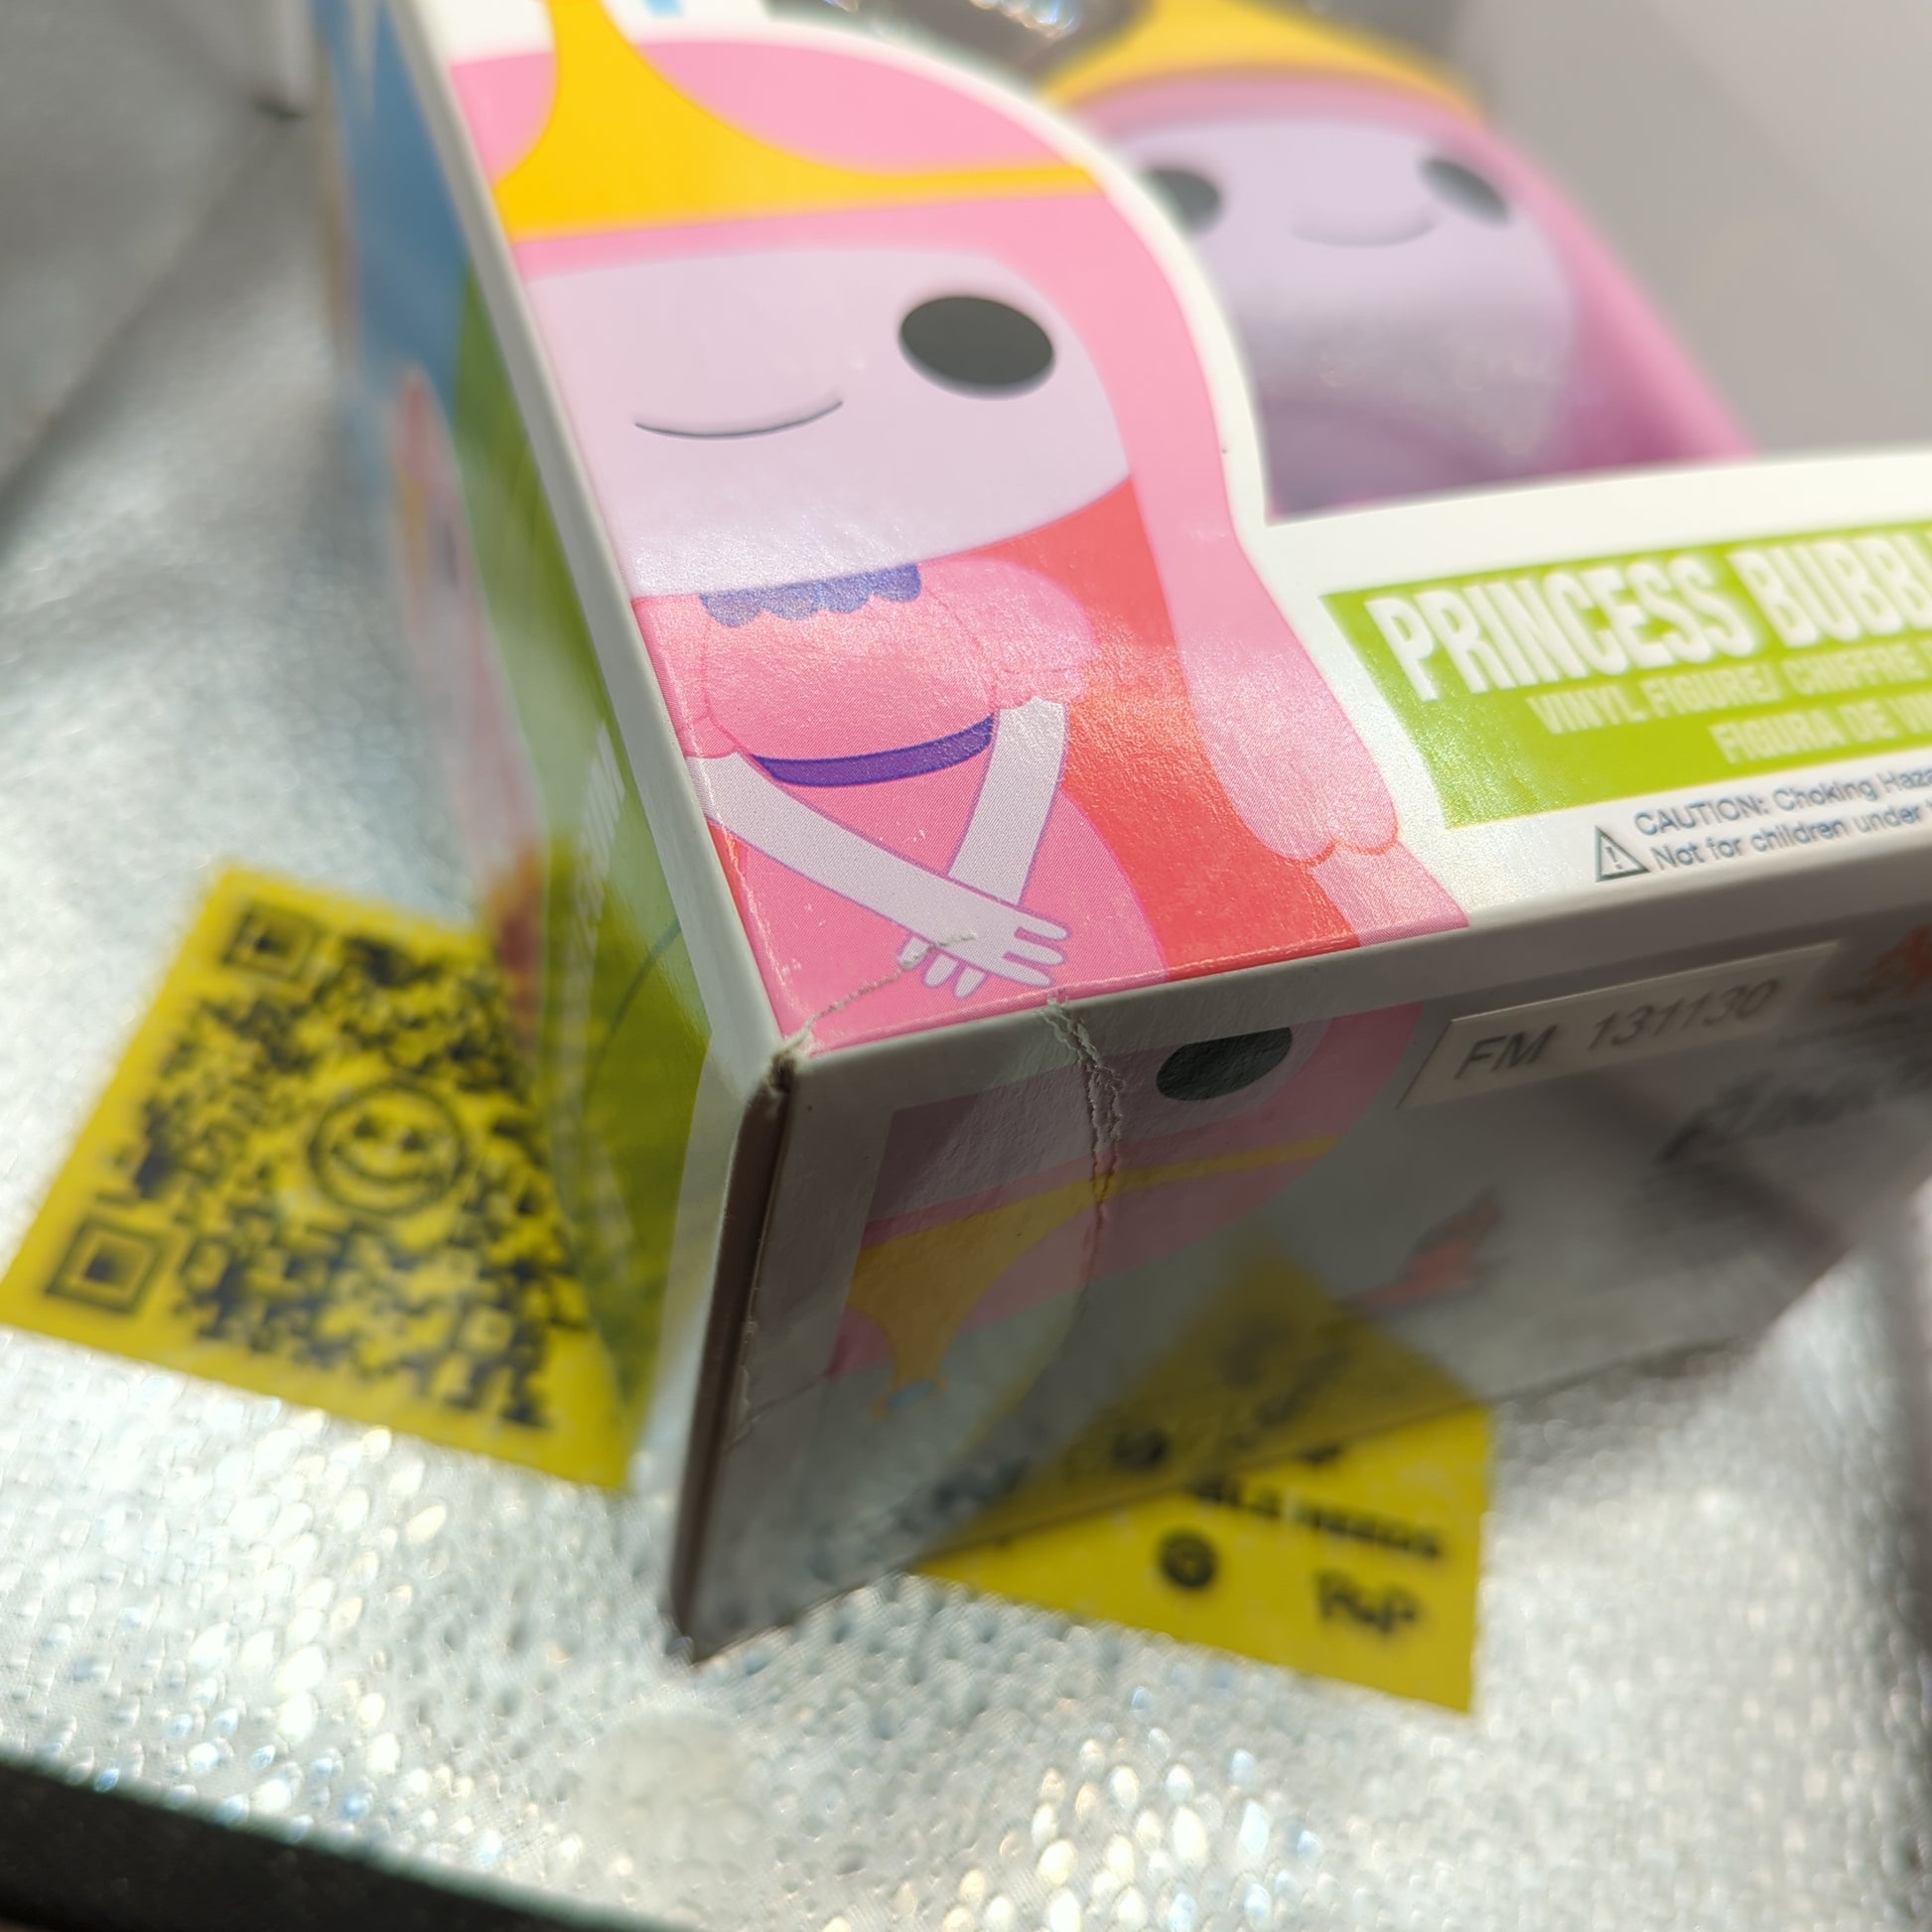 Funko Pop! Vinyl: Adventure Time - Princess Bubblegum #51 FRENLY BRICKS - Open 7 Days